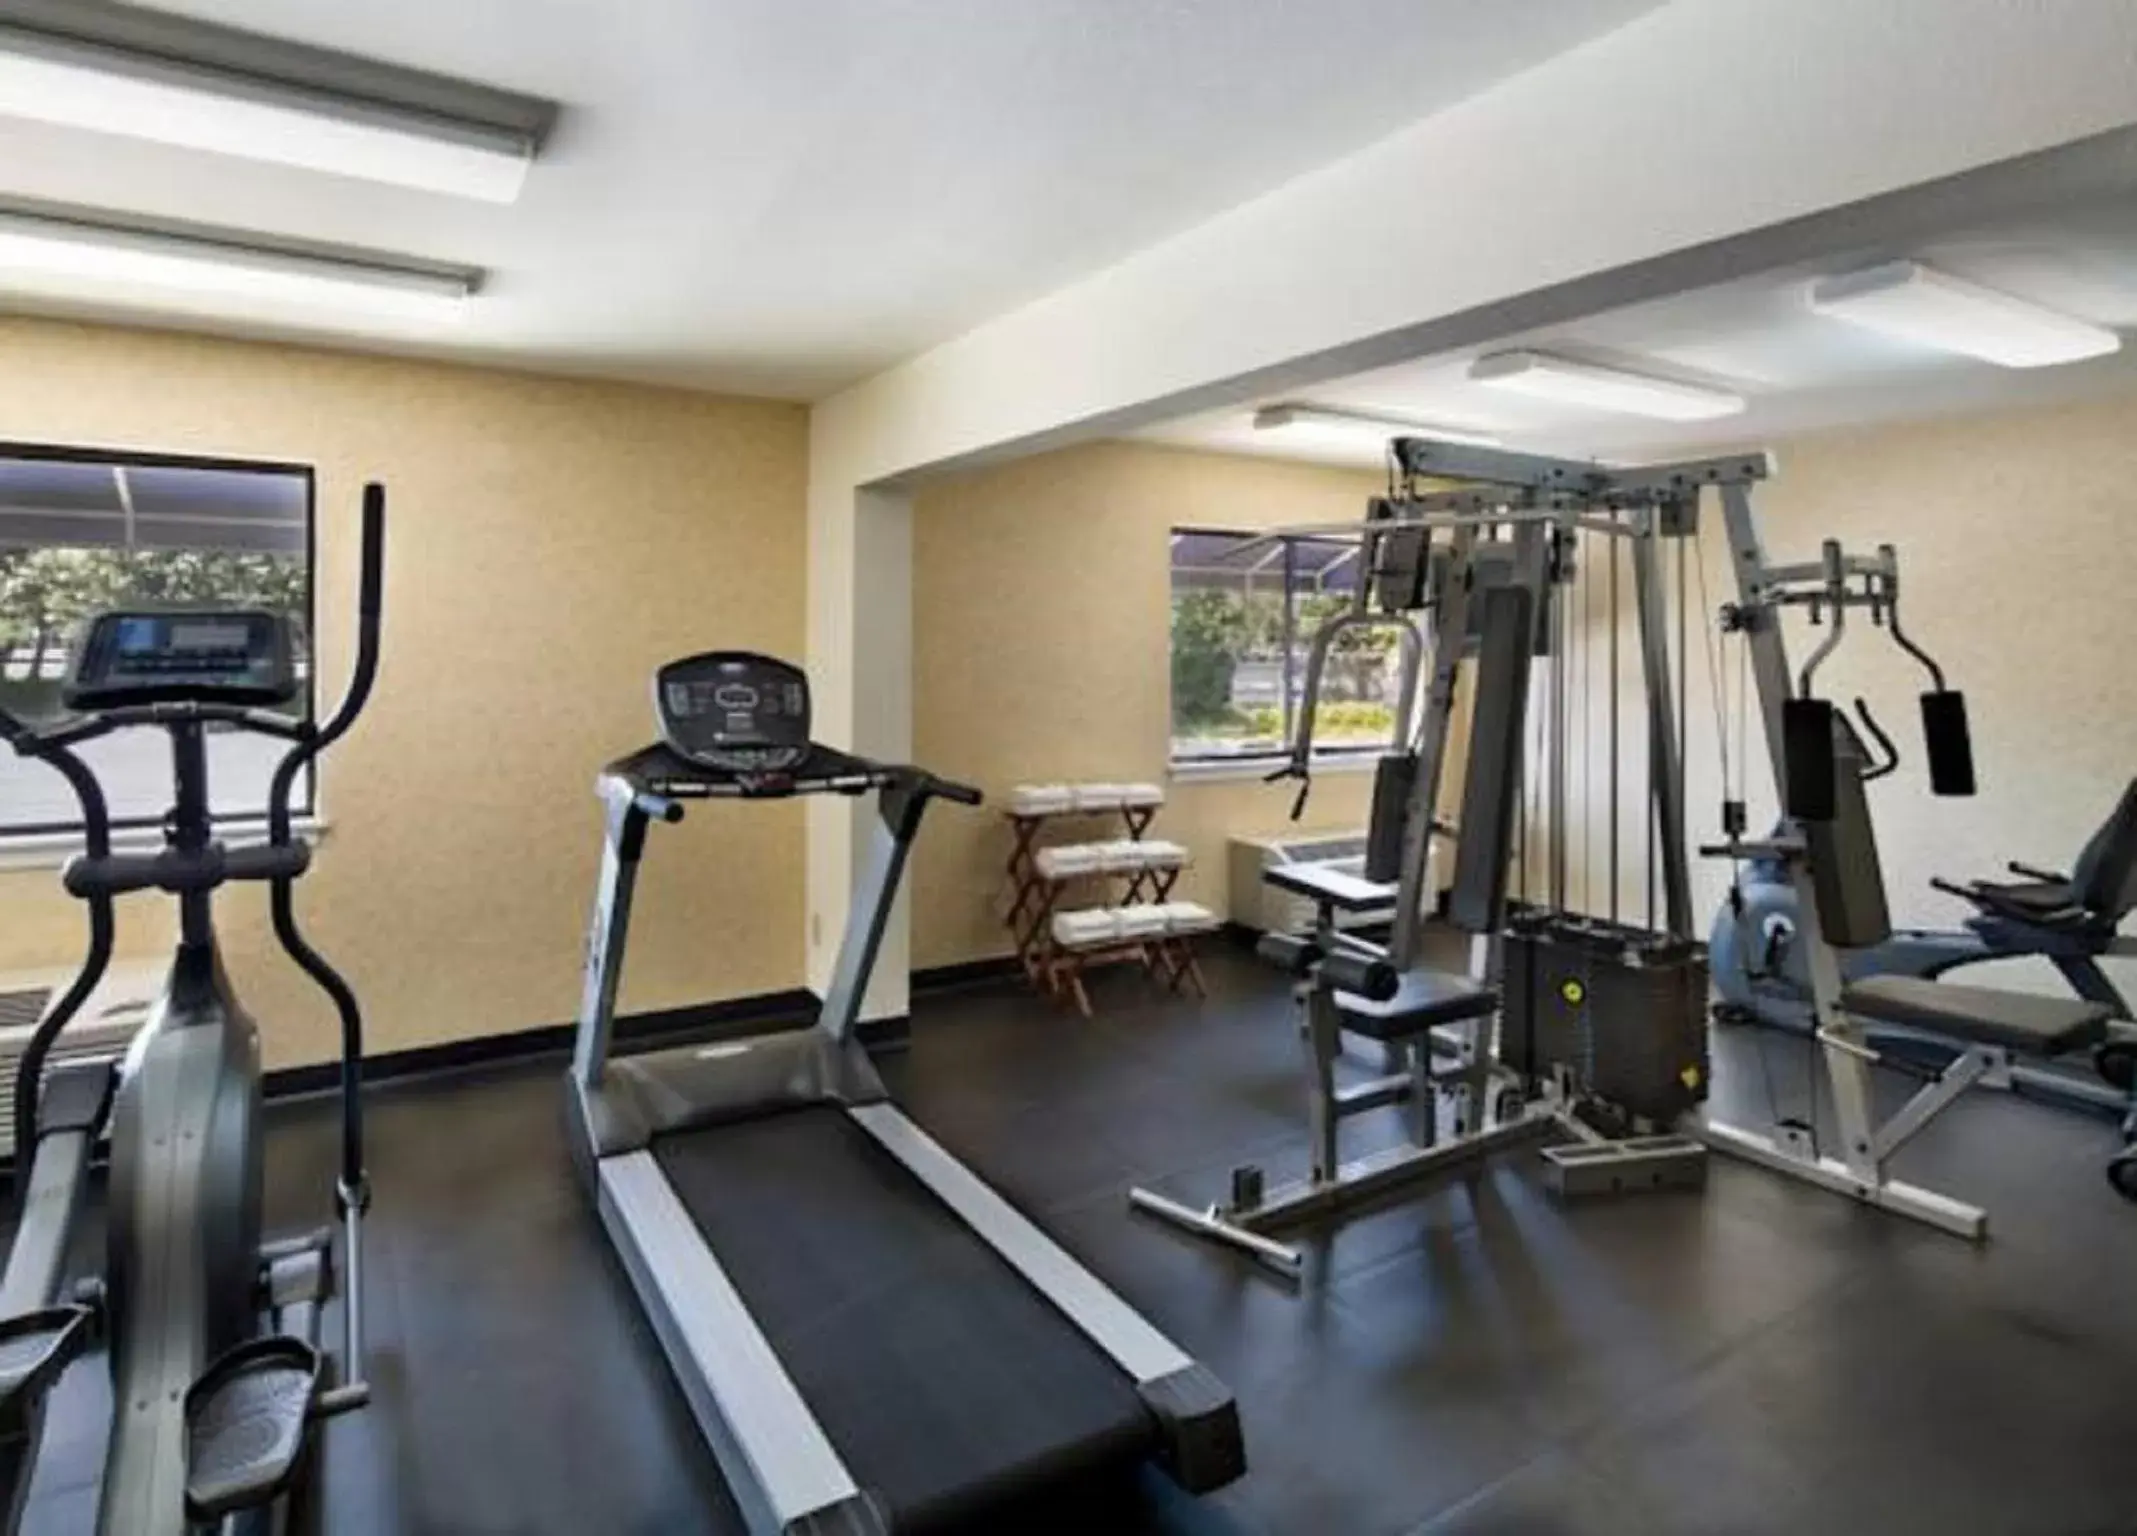 Fitness centre/facilities, Fitness Center/Facilities in Maple Tree Inn